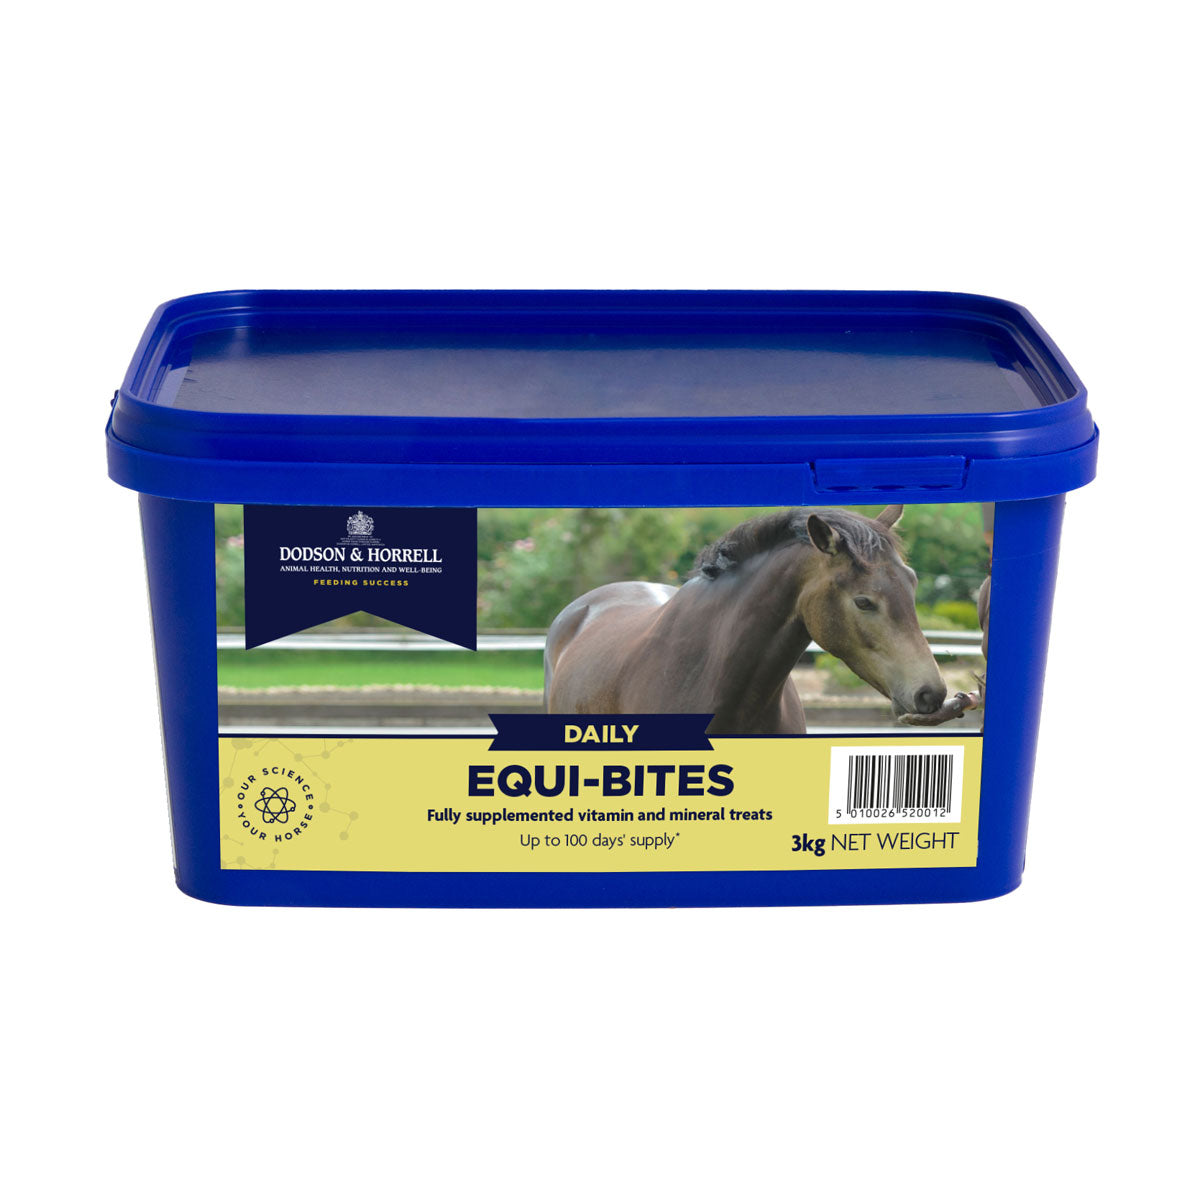 Dodson & Horrell Equi-Bites - Barnstaple Equestrian Supplies